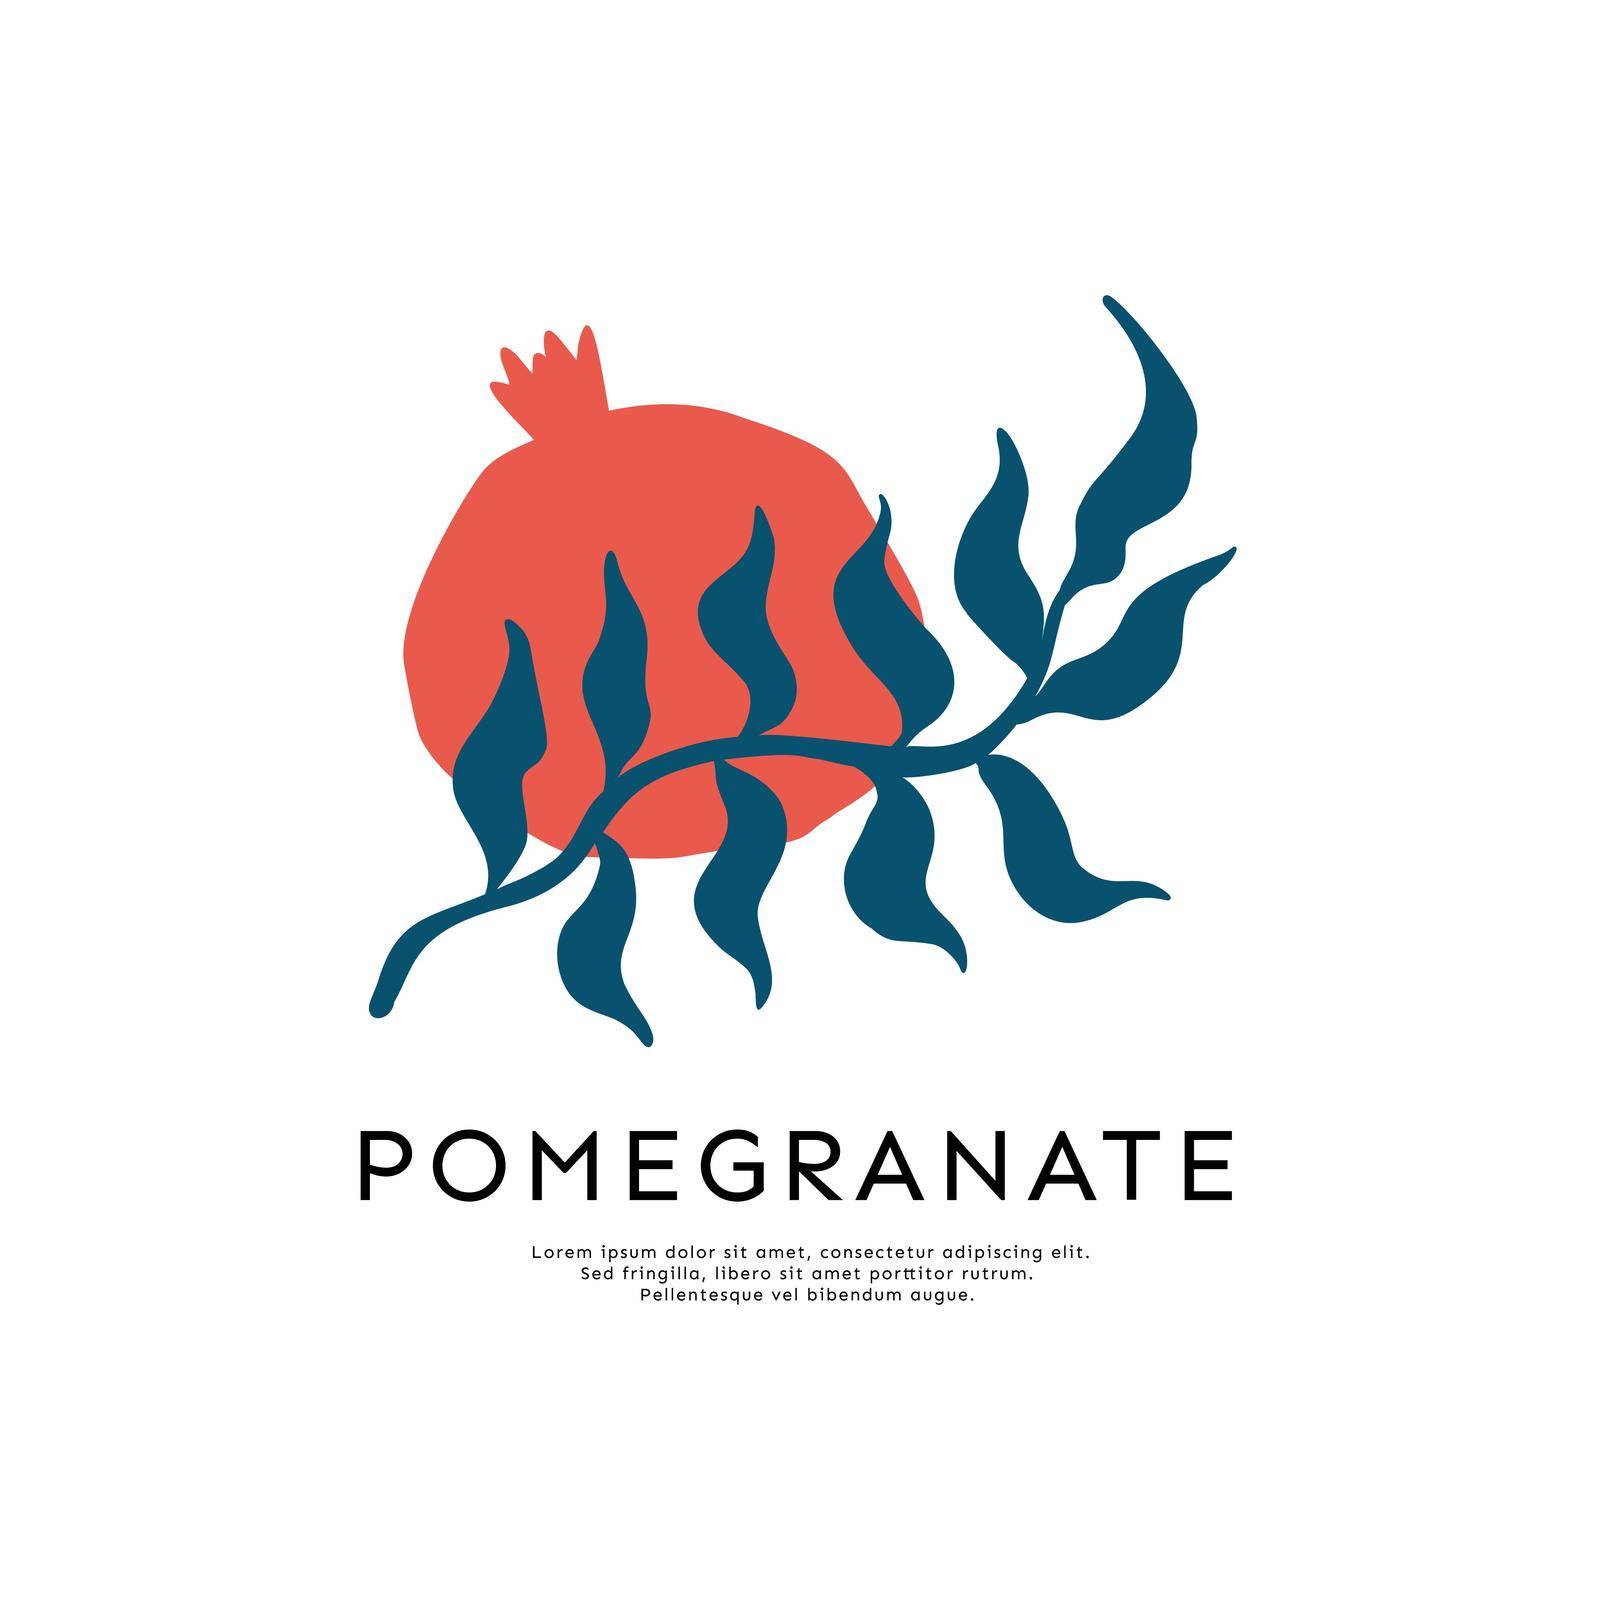 Pomegranate vector logo isolated on white background. by jatmikaV